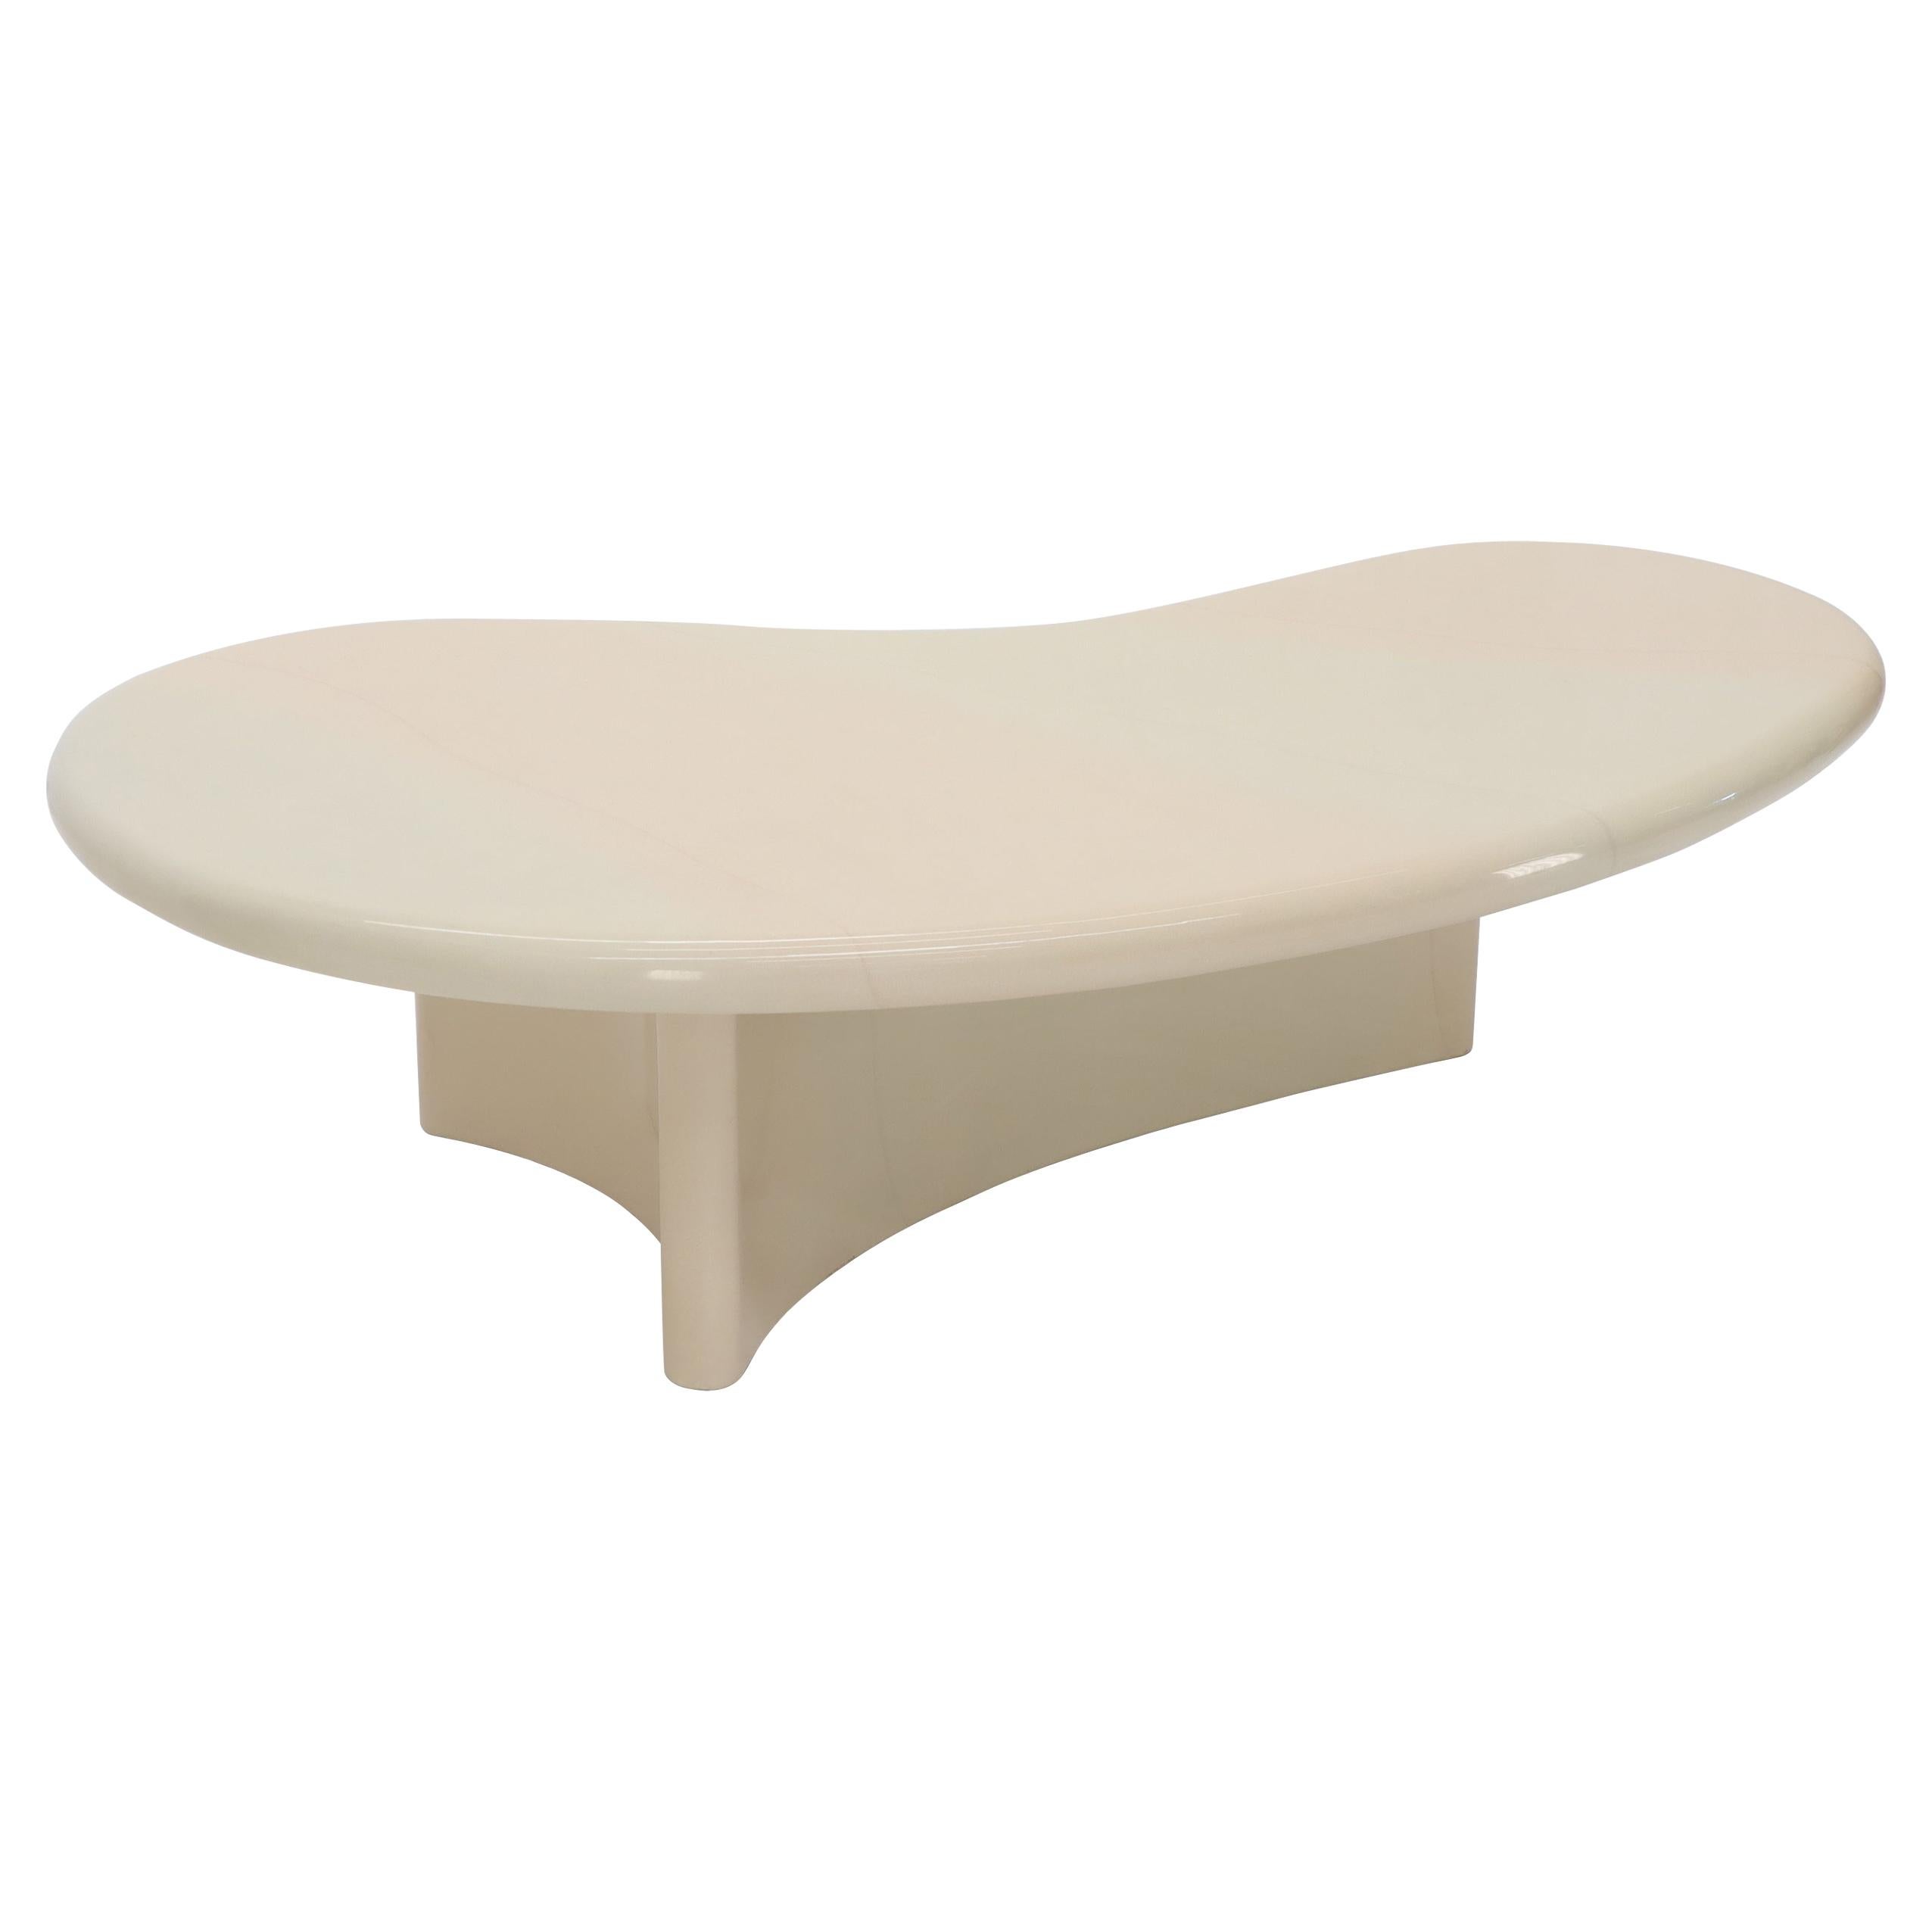 Organic Kidney Shape Beige Cream White Lacquer Mid-Century Modern Coffee Table